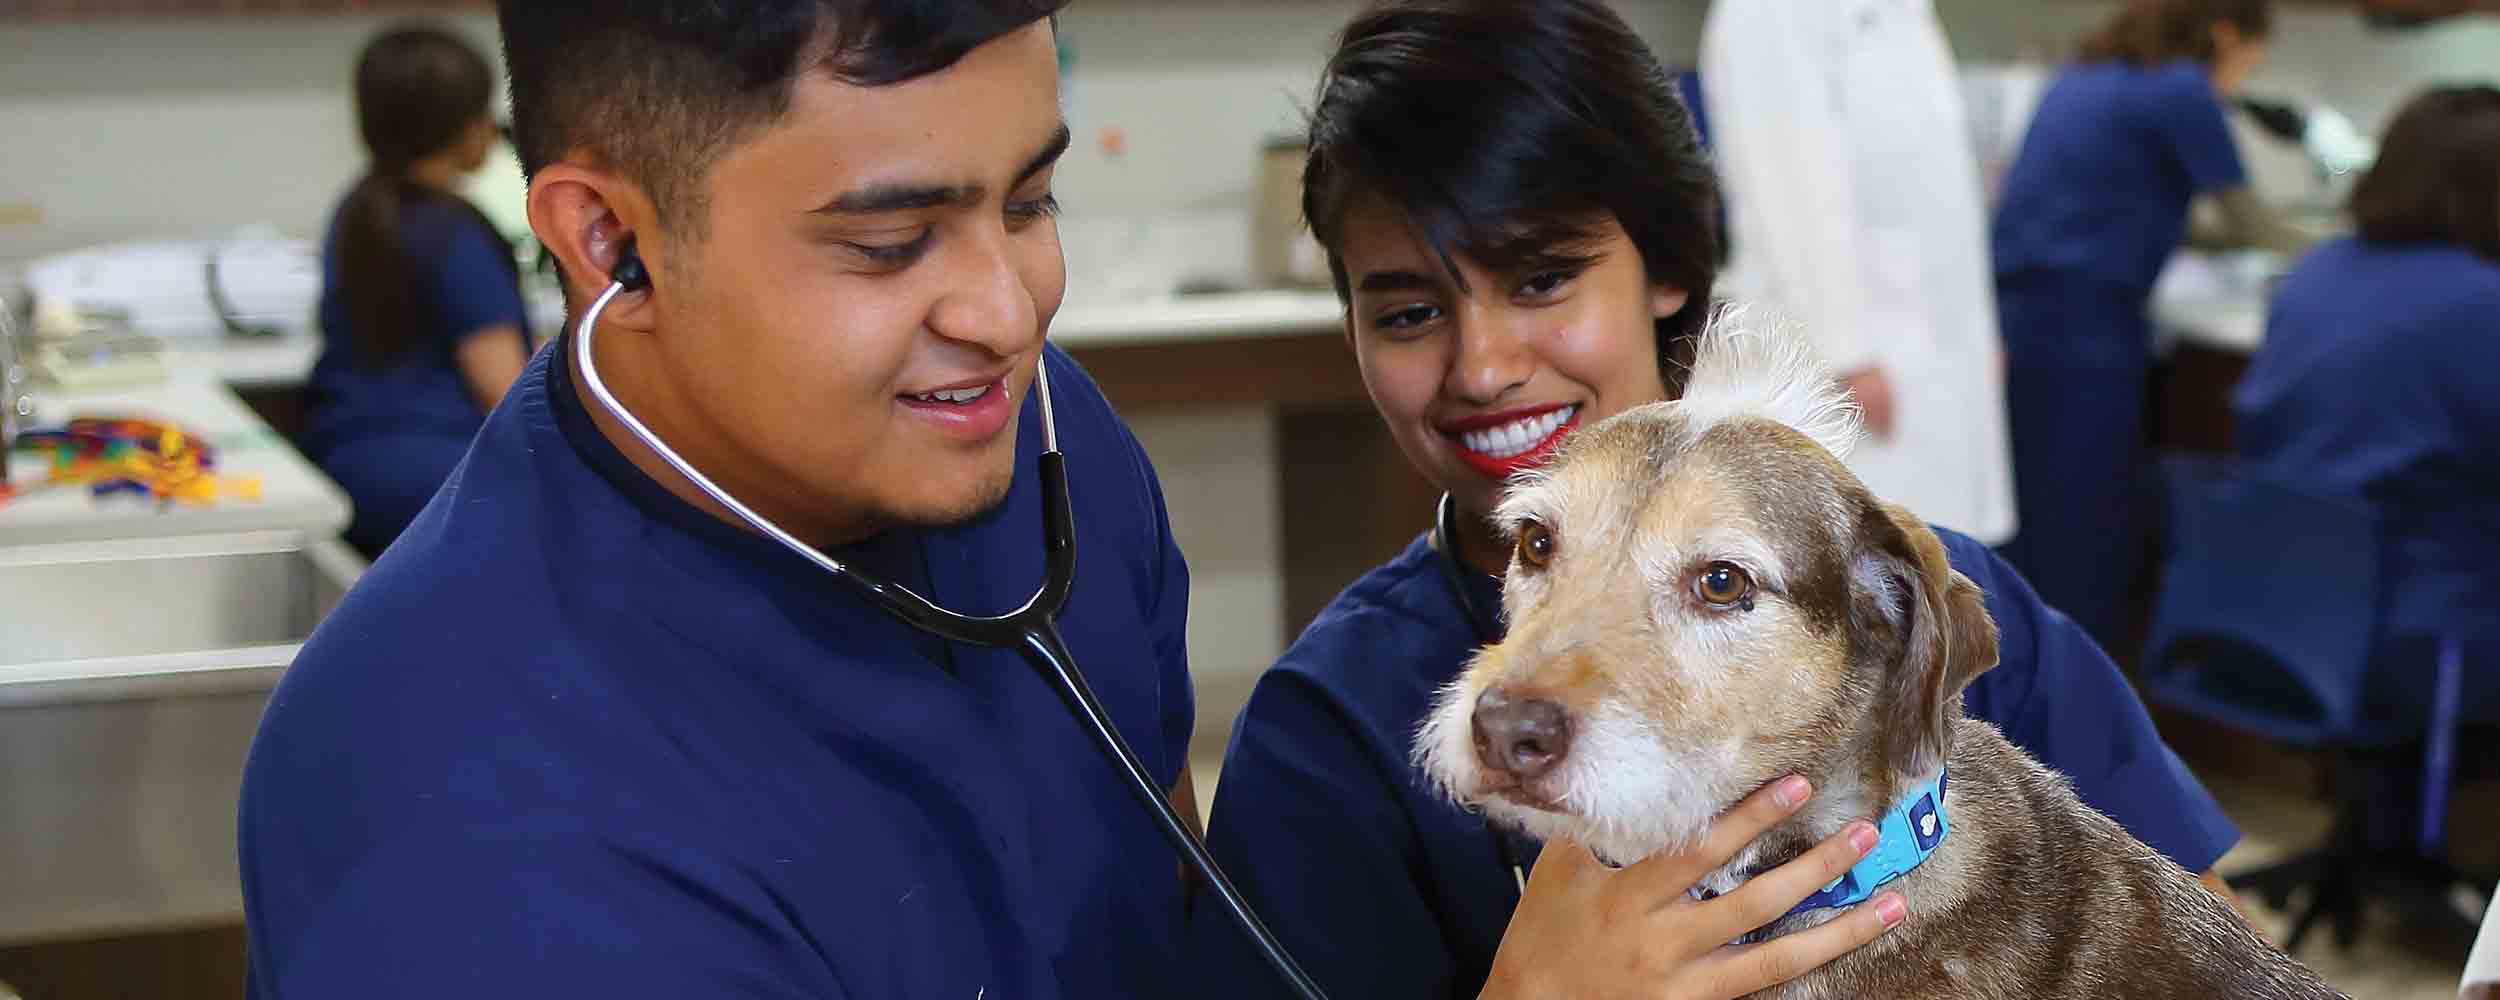 Veterinary Assistant Certificate Program